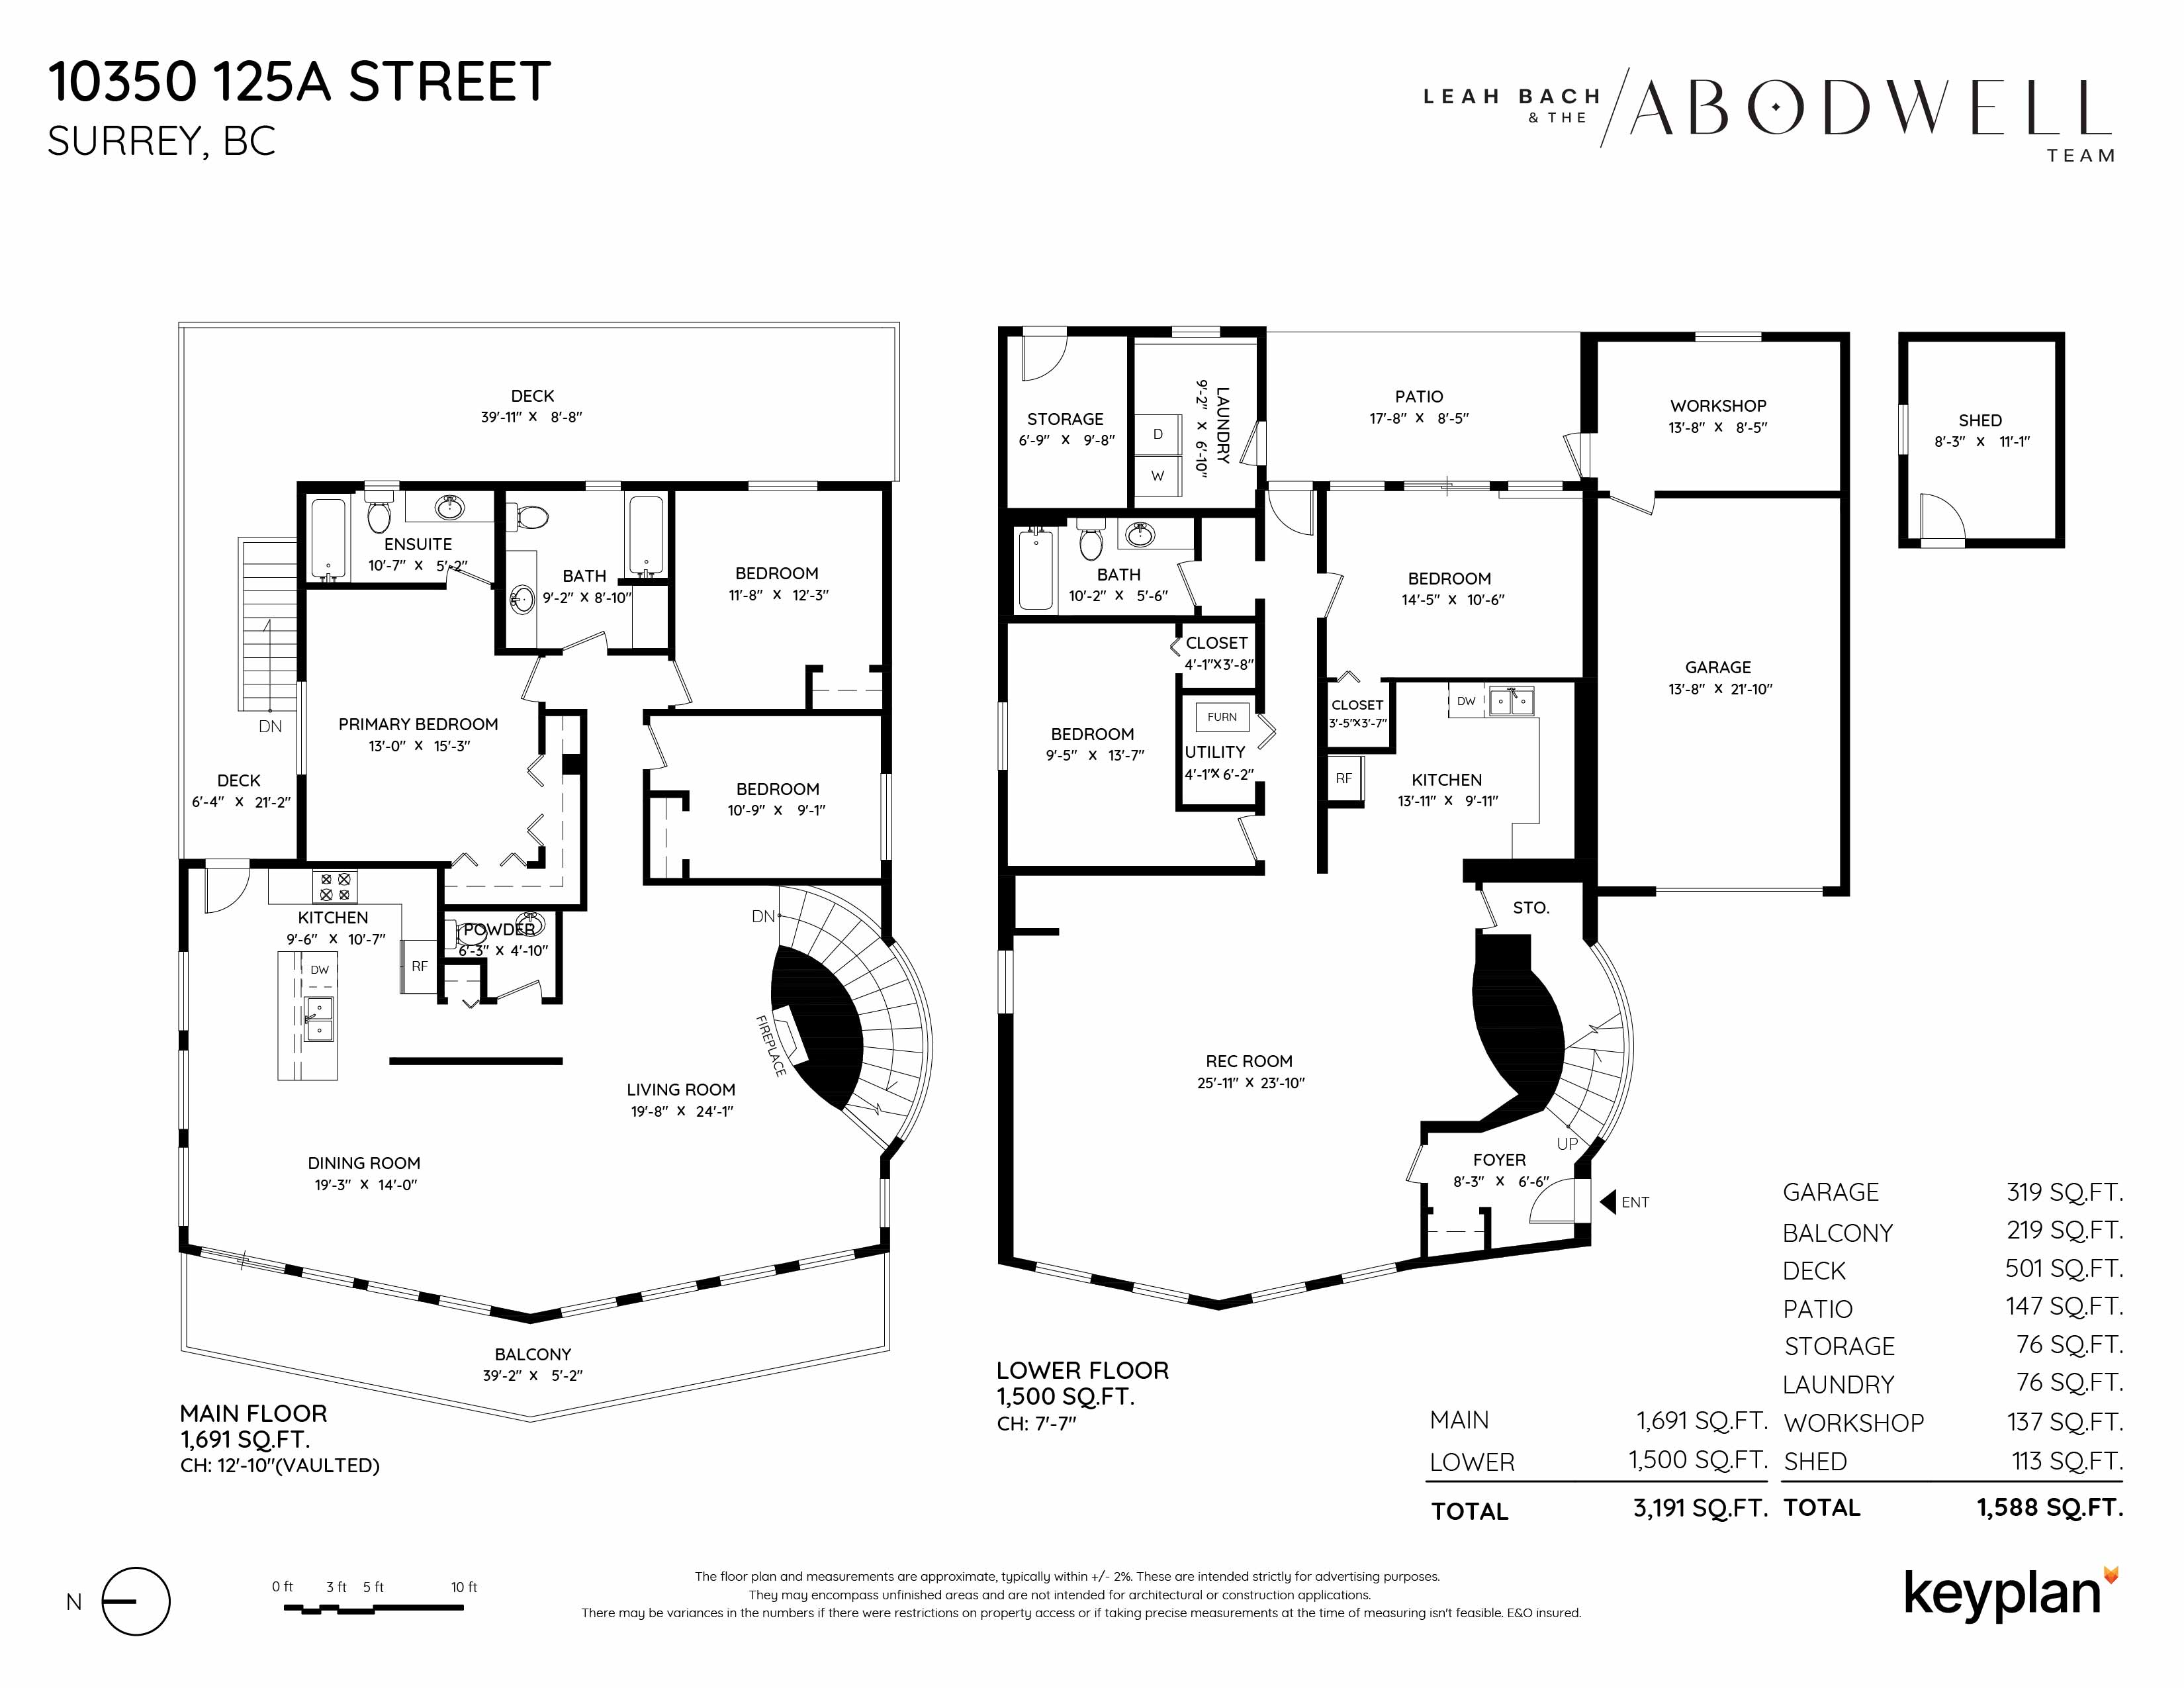 Leah Bach & The Abodwell Team - 10350 125a Street, Surrey, BC, Canada | Floor Plan 1